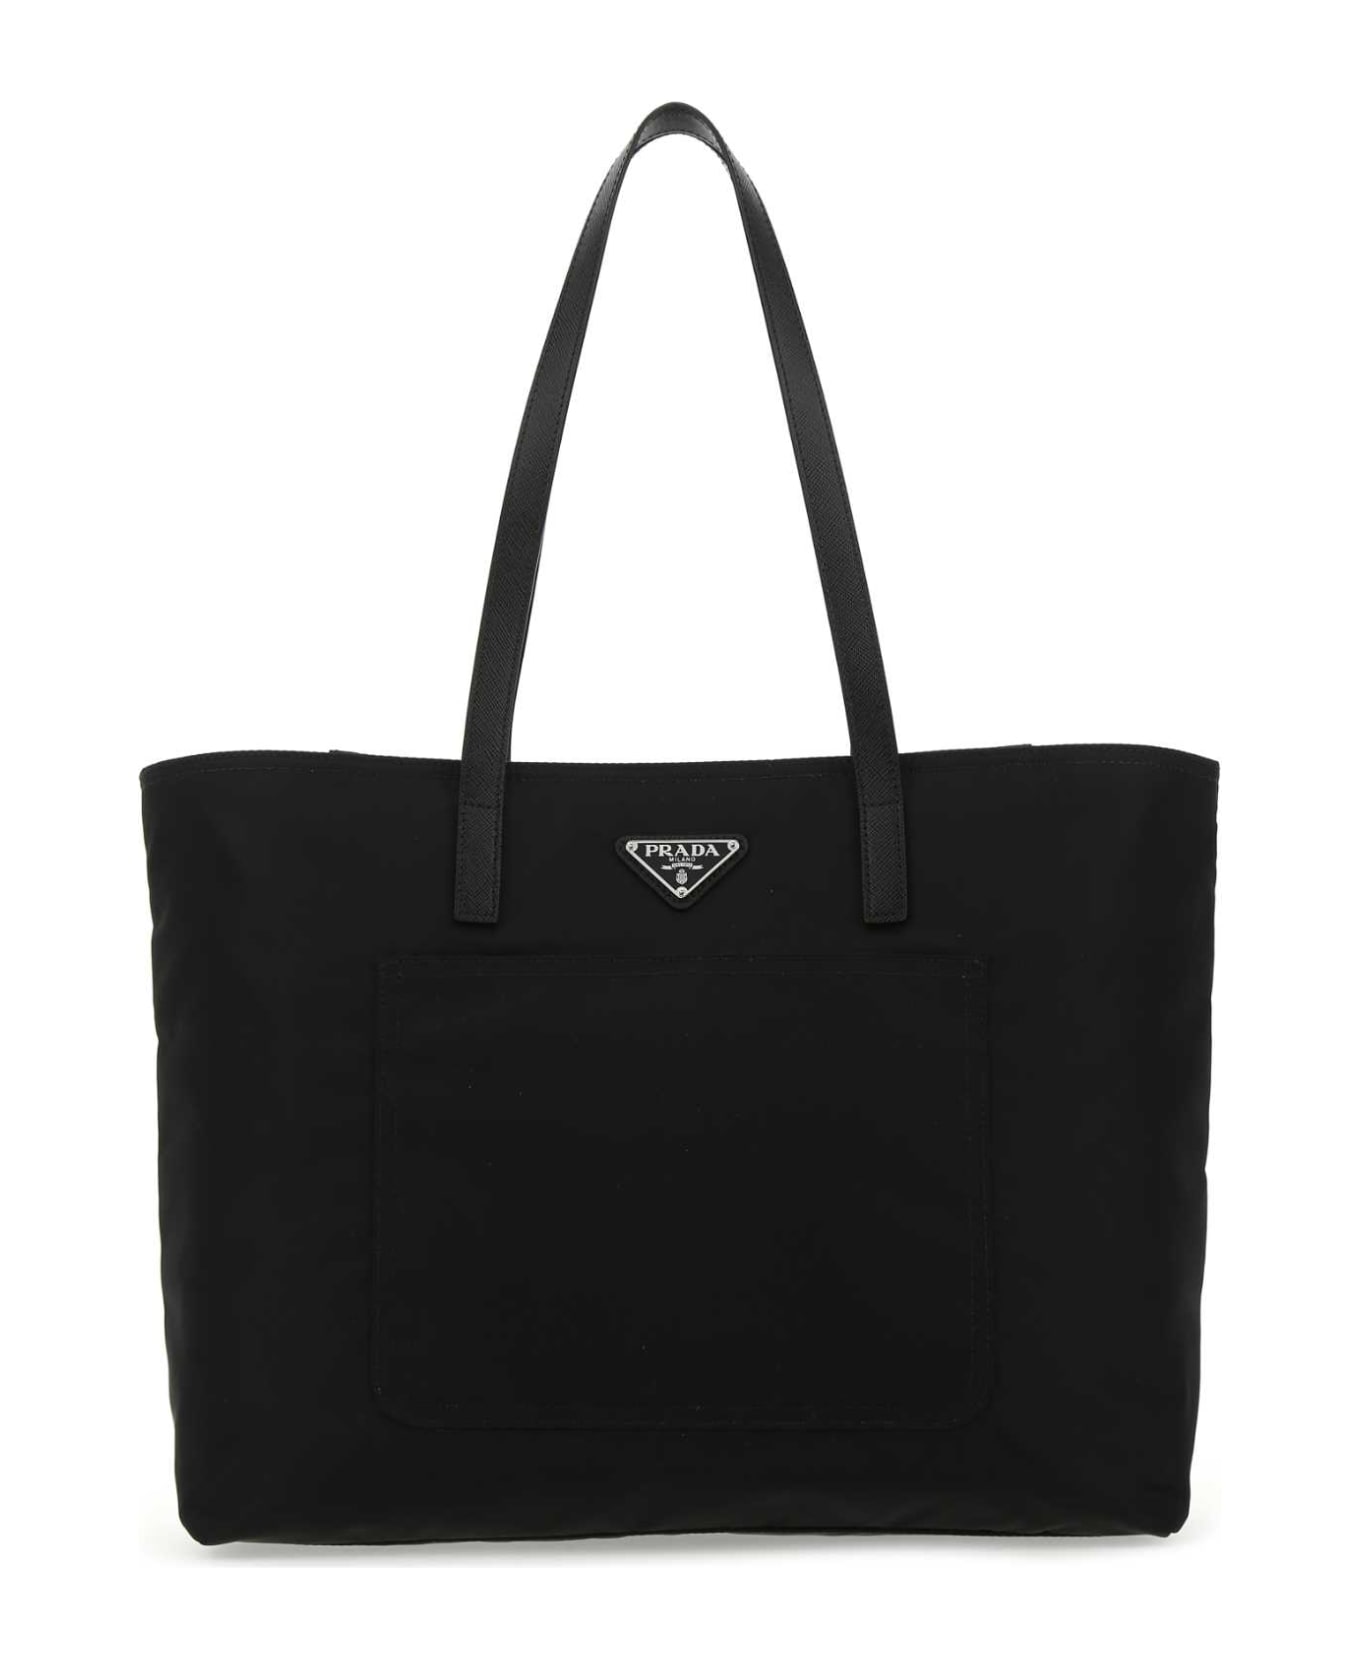 Prada Black Nylon Shopping Bag - F0002